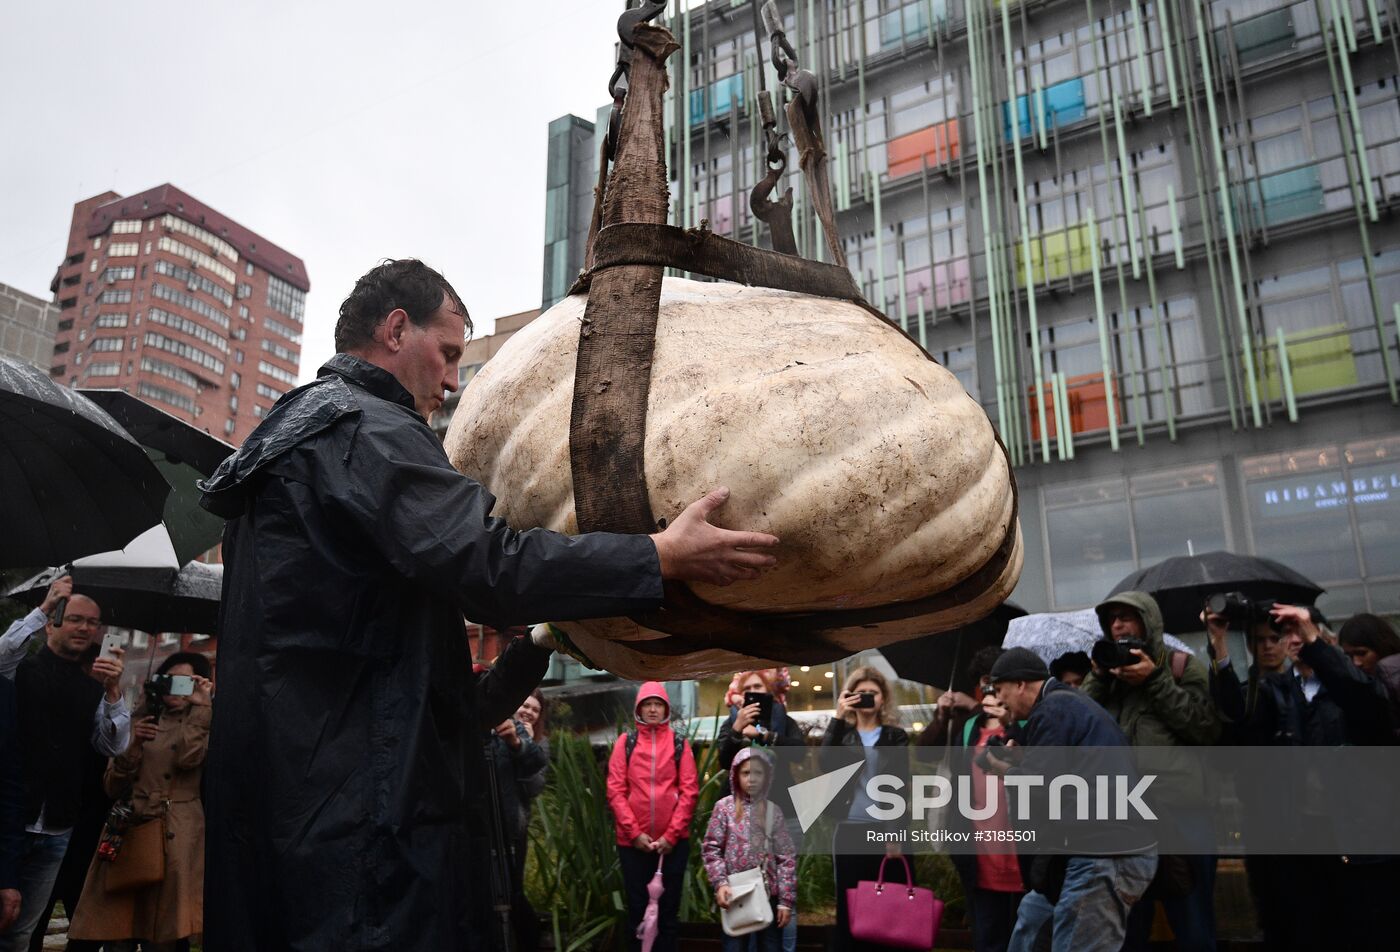 Presentation of Russia's largest pumpkin